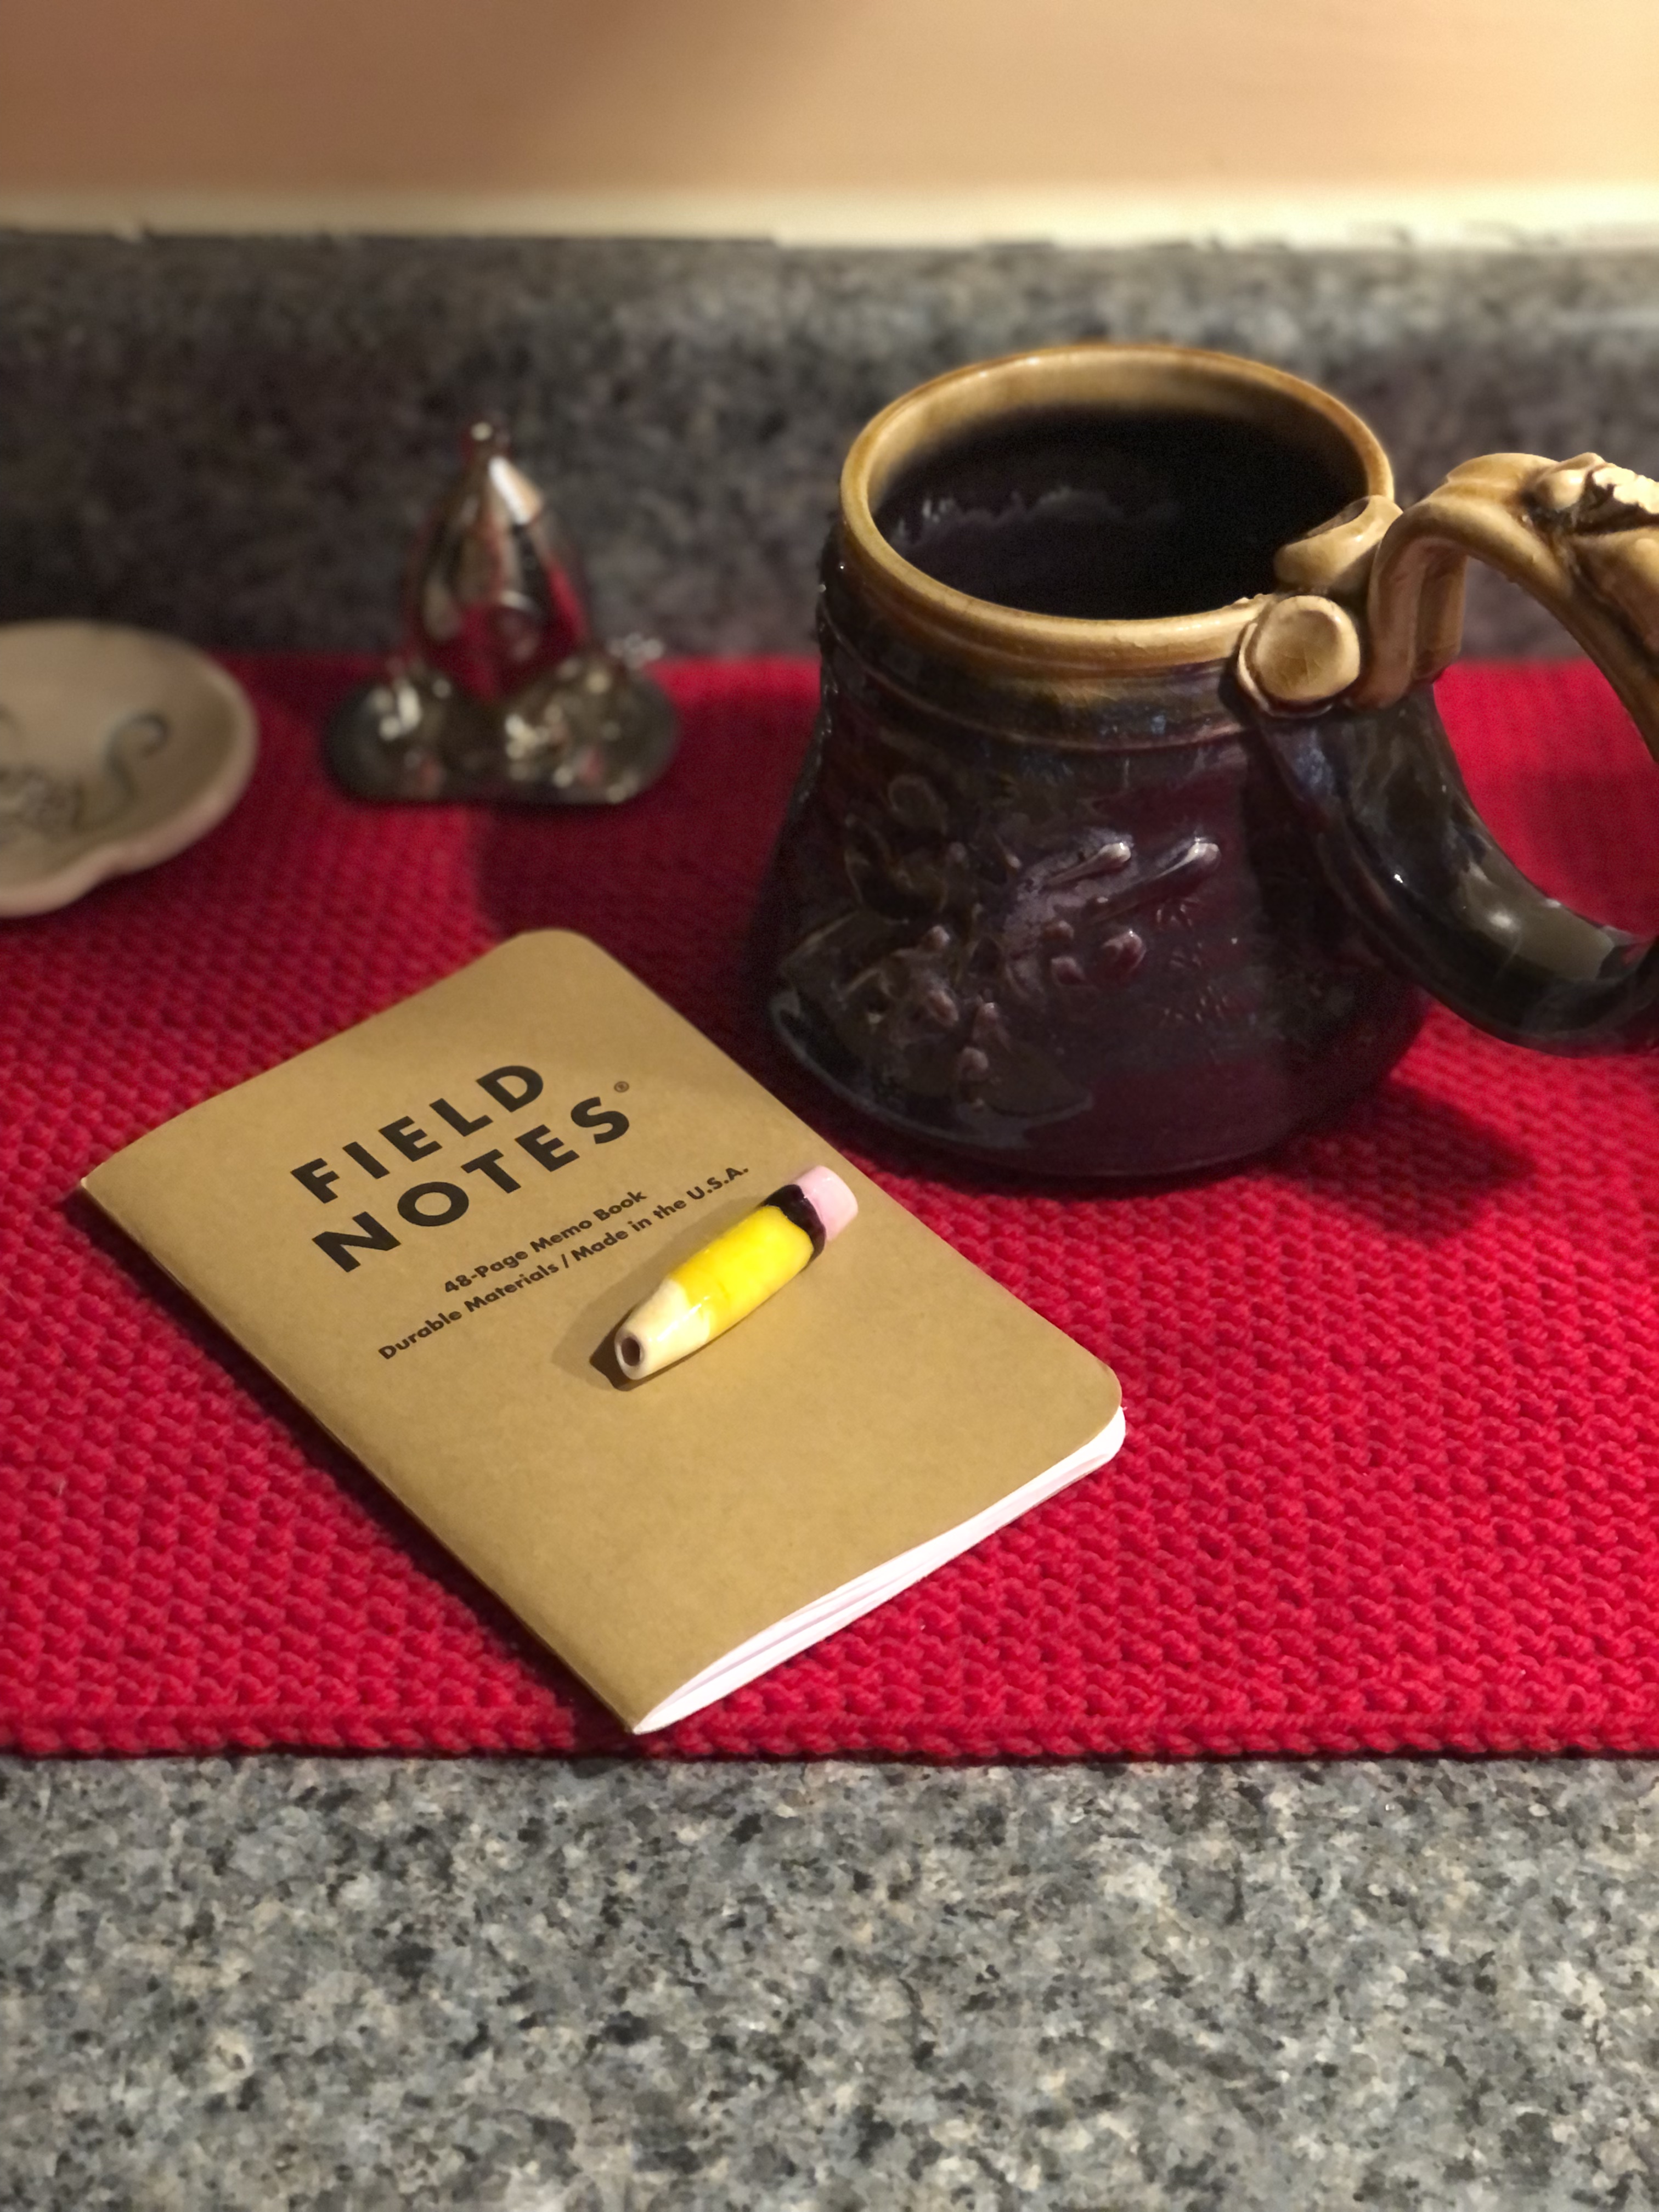 A mug next to a Field Notes notebook